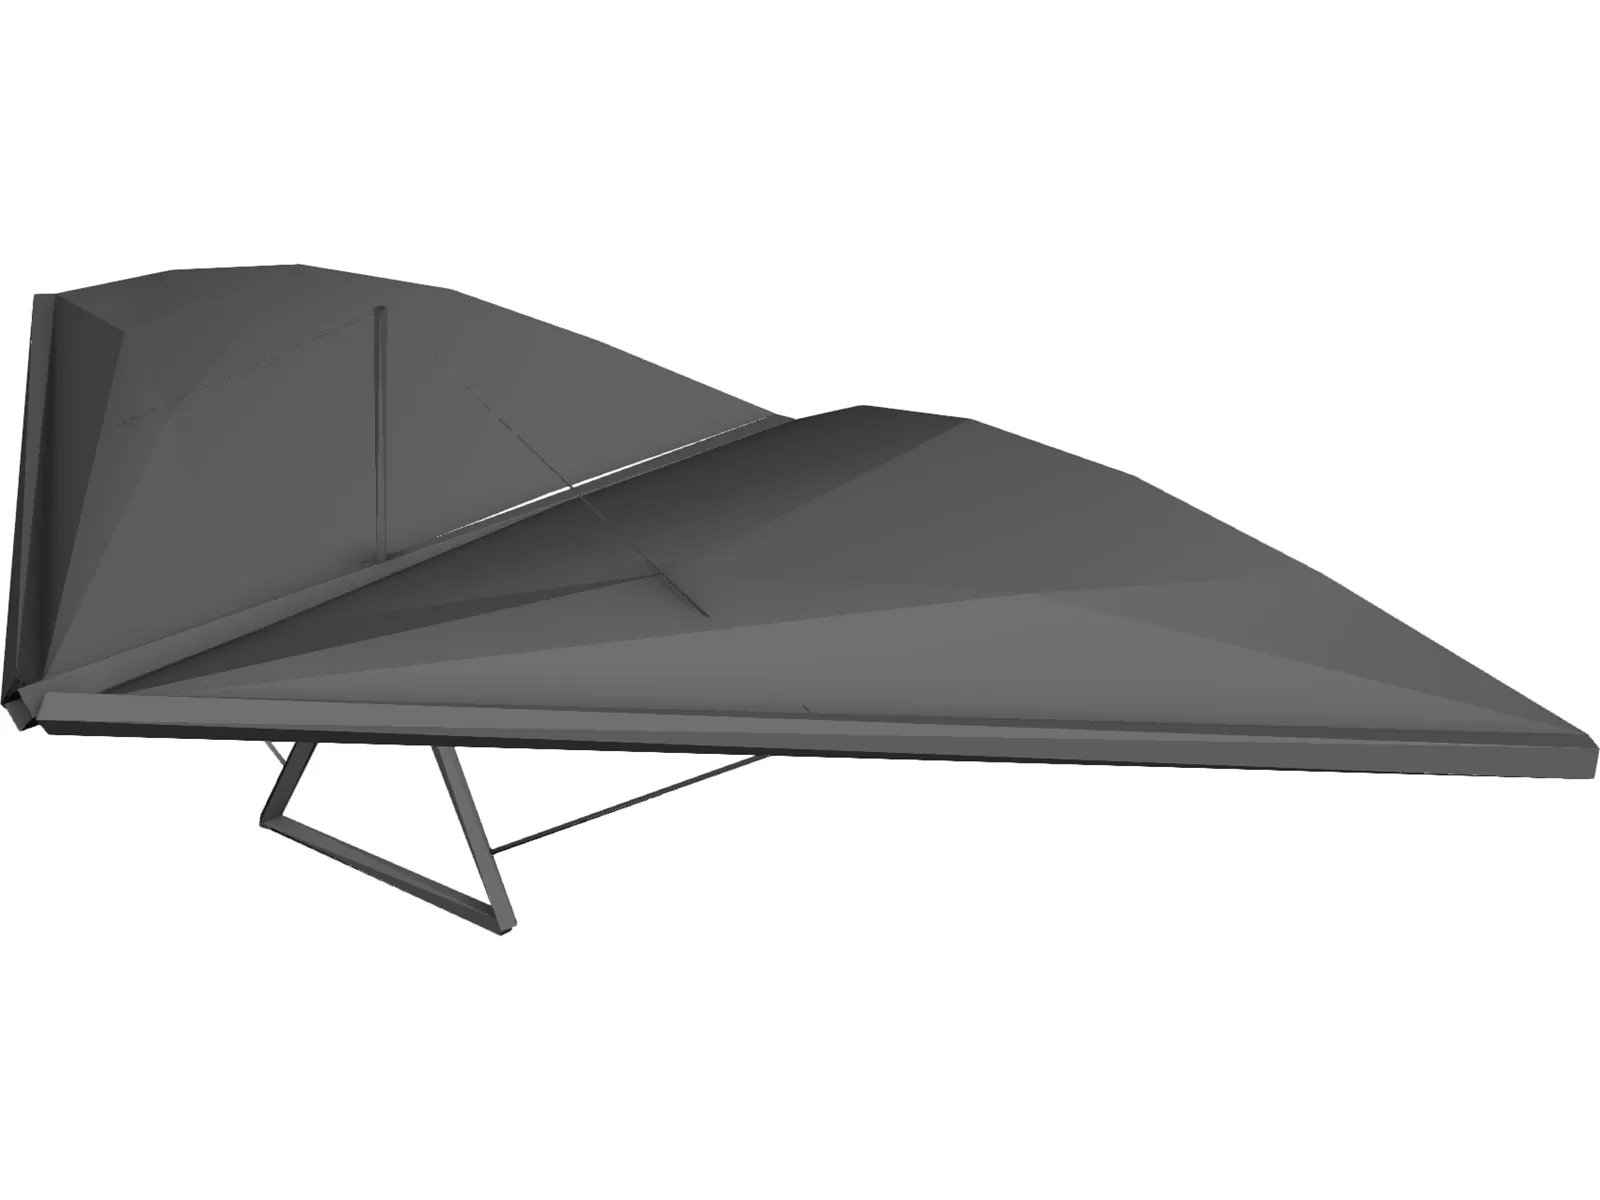 Hang Glider 3D Model